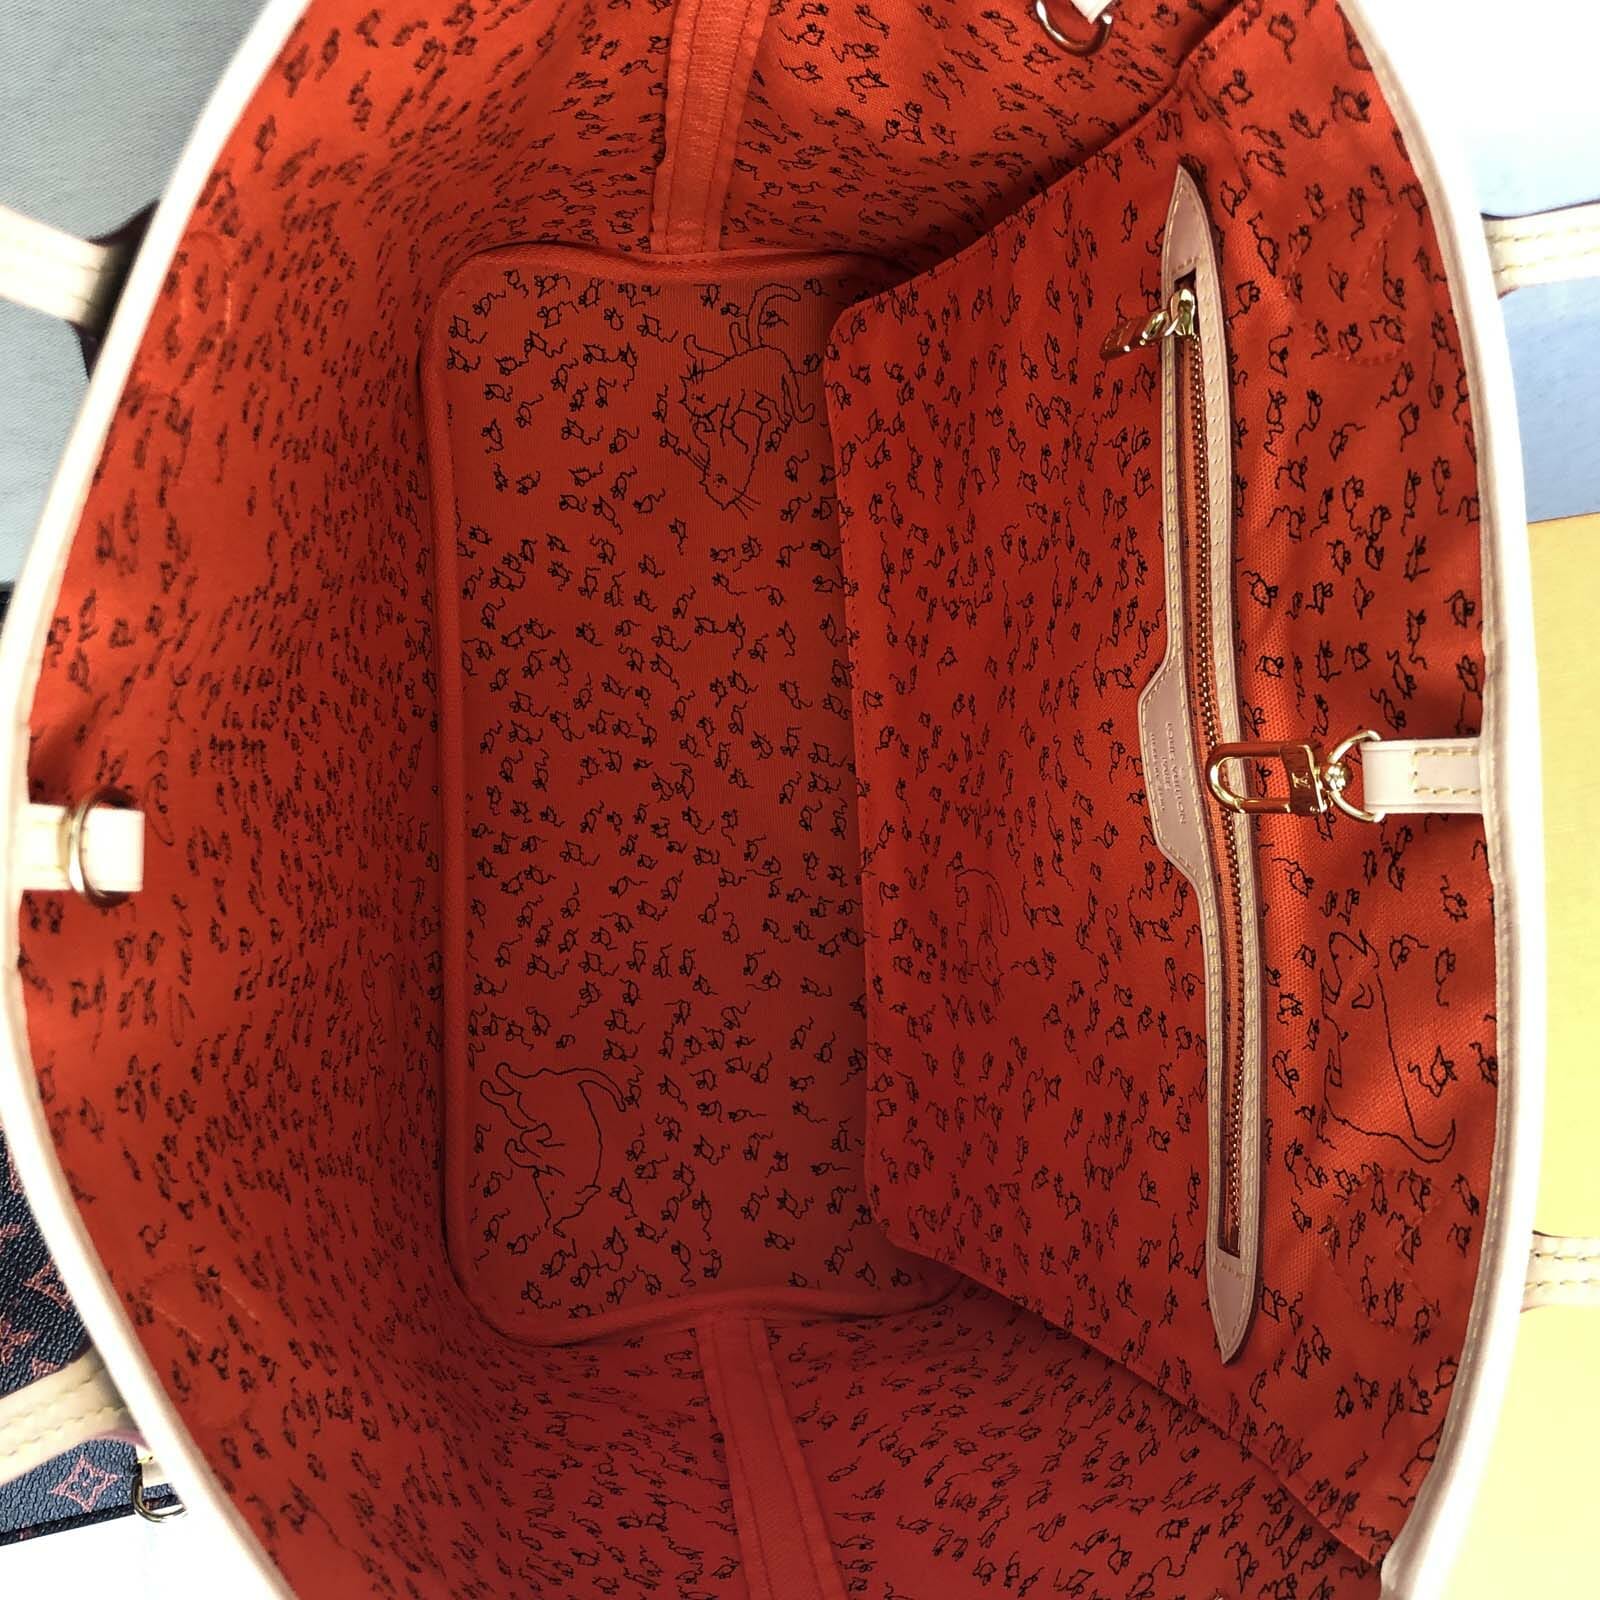 Louis Vuitton Catogram Grace Coddington Neverfull MM Tote Bag with Pouch - Handbagholic